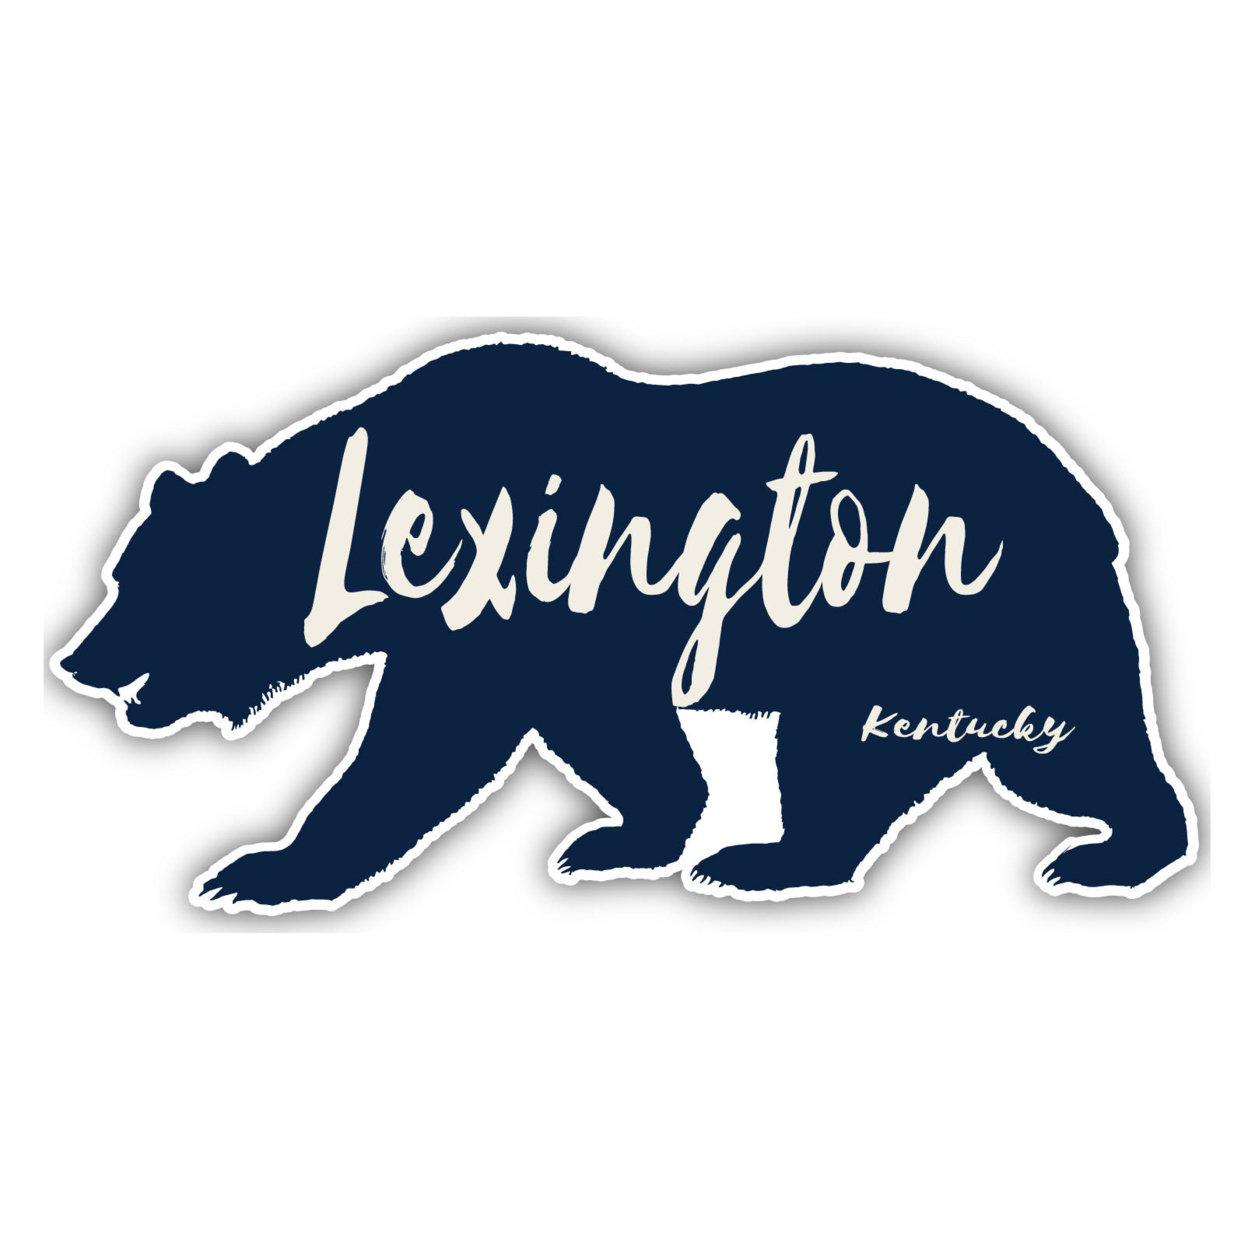 Lexington Kentucky Souvenir Decorative Stickers (Choose Theme And Size) - 4-Inch, Camp Life